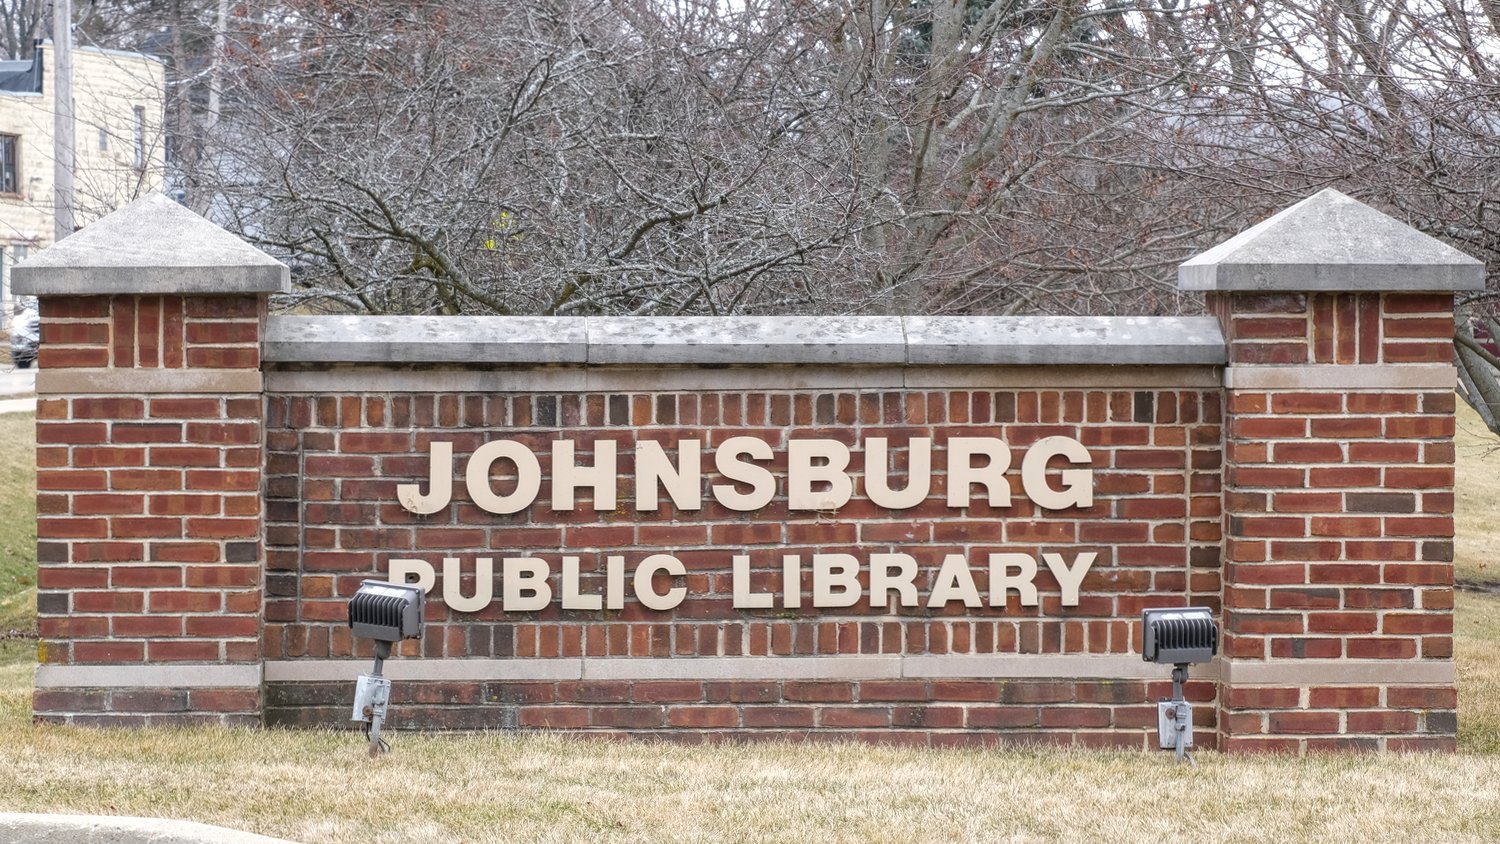 Johnsburg Public Library sign.